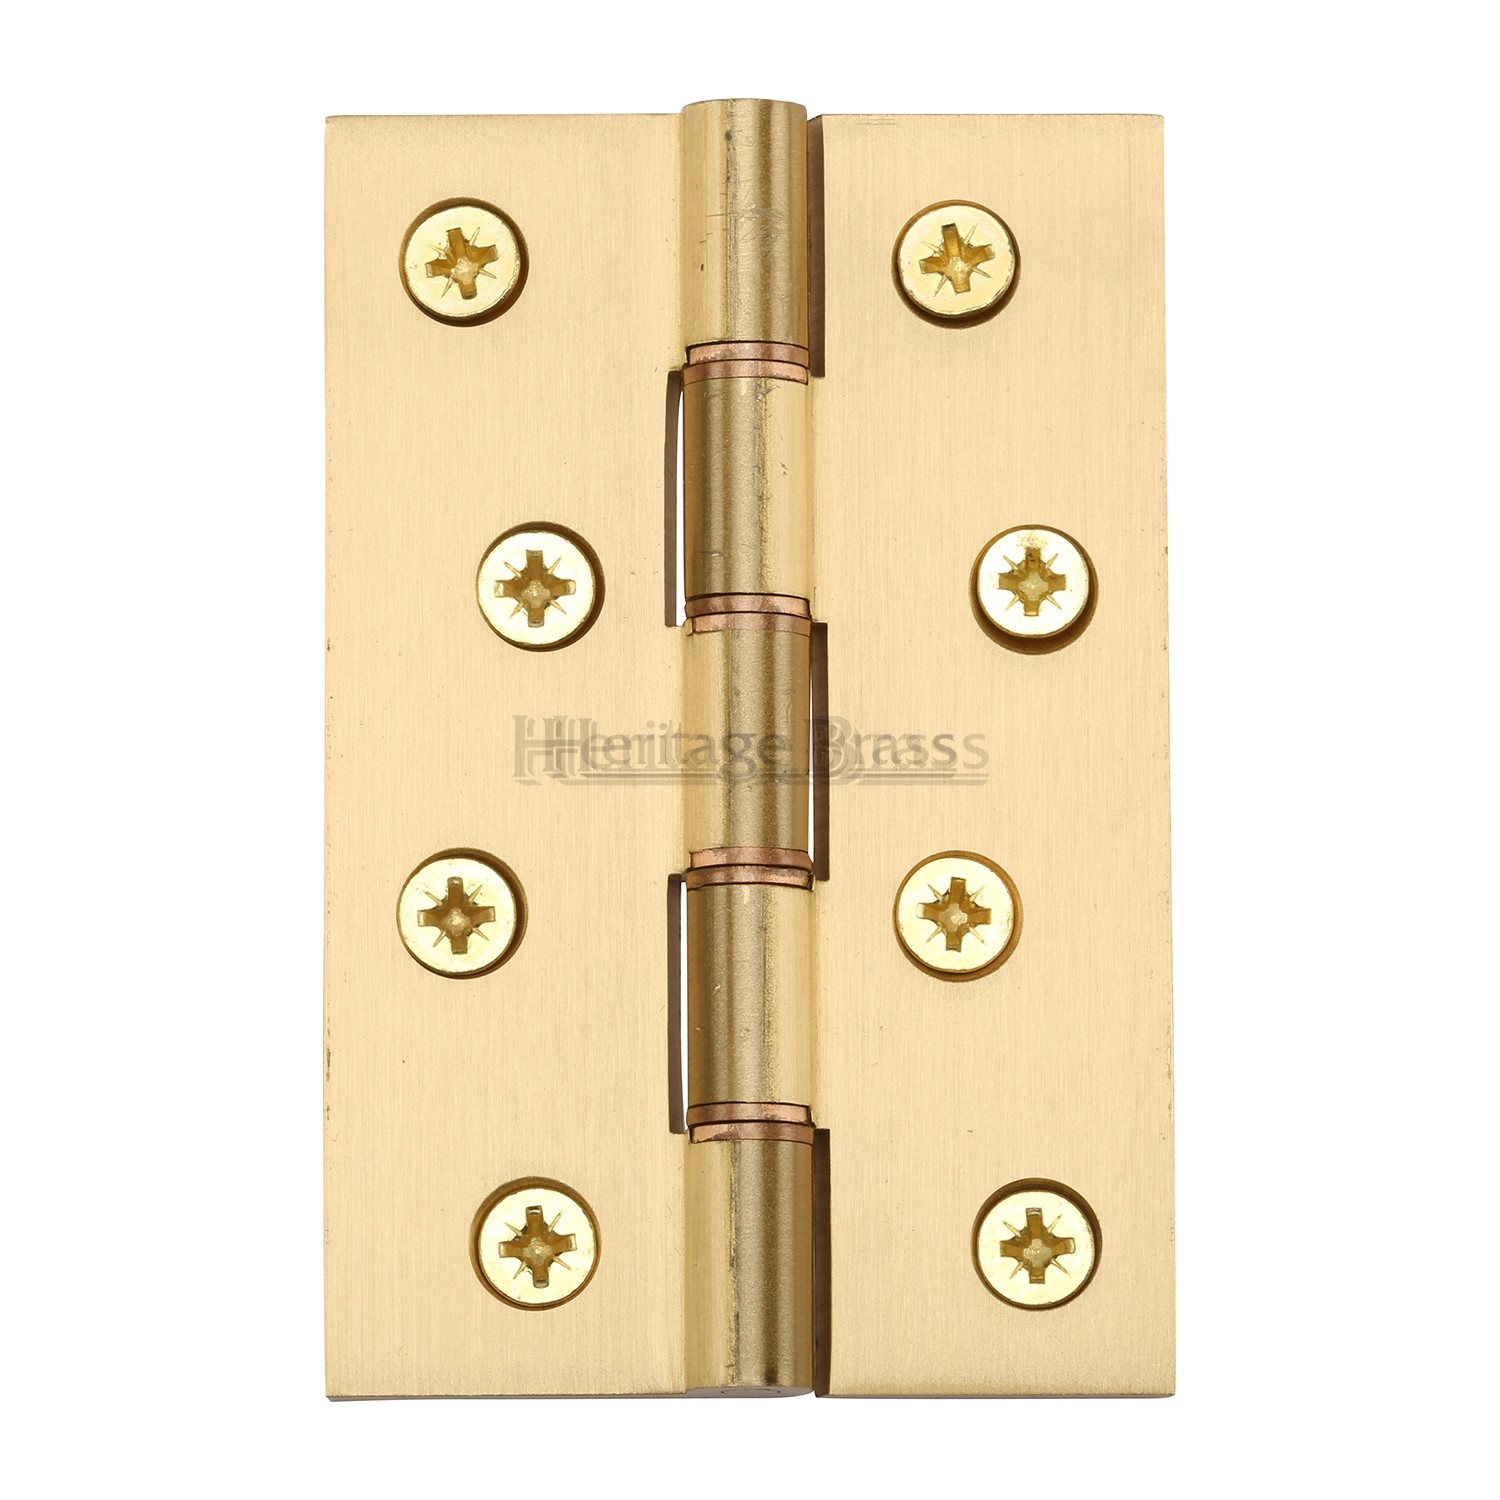 Heritage Brass Hinge Brass with Phosphor Washers 4" x 2 5/8"